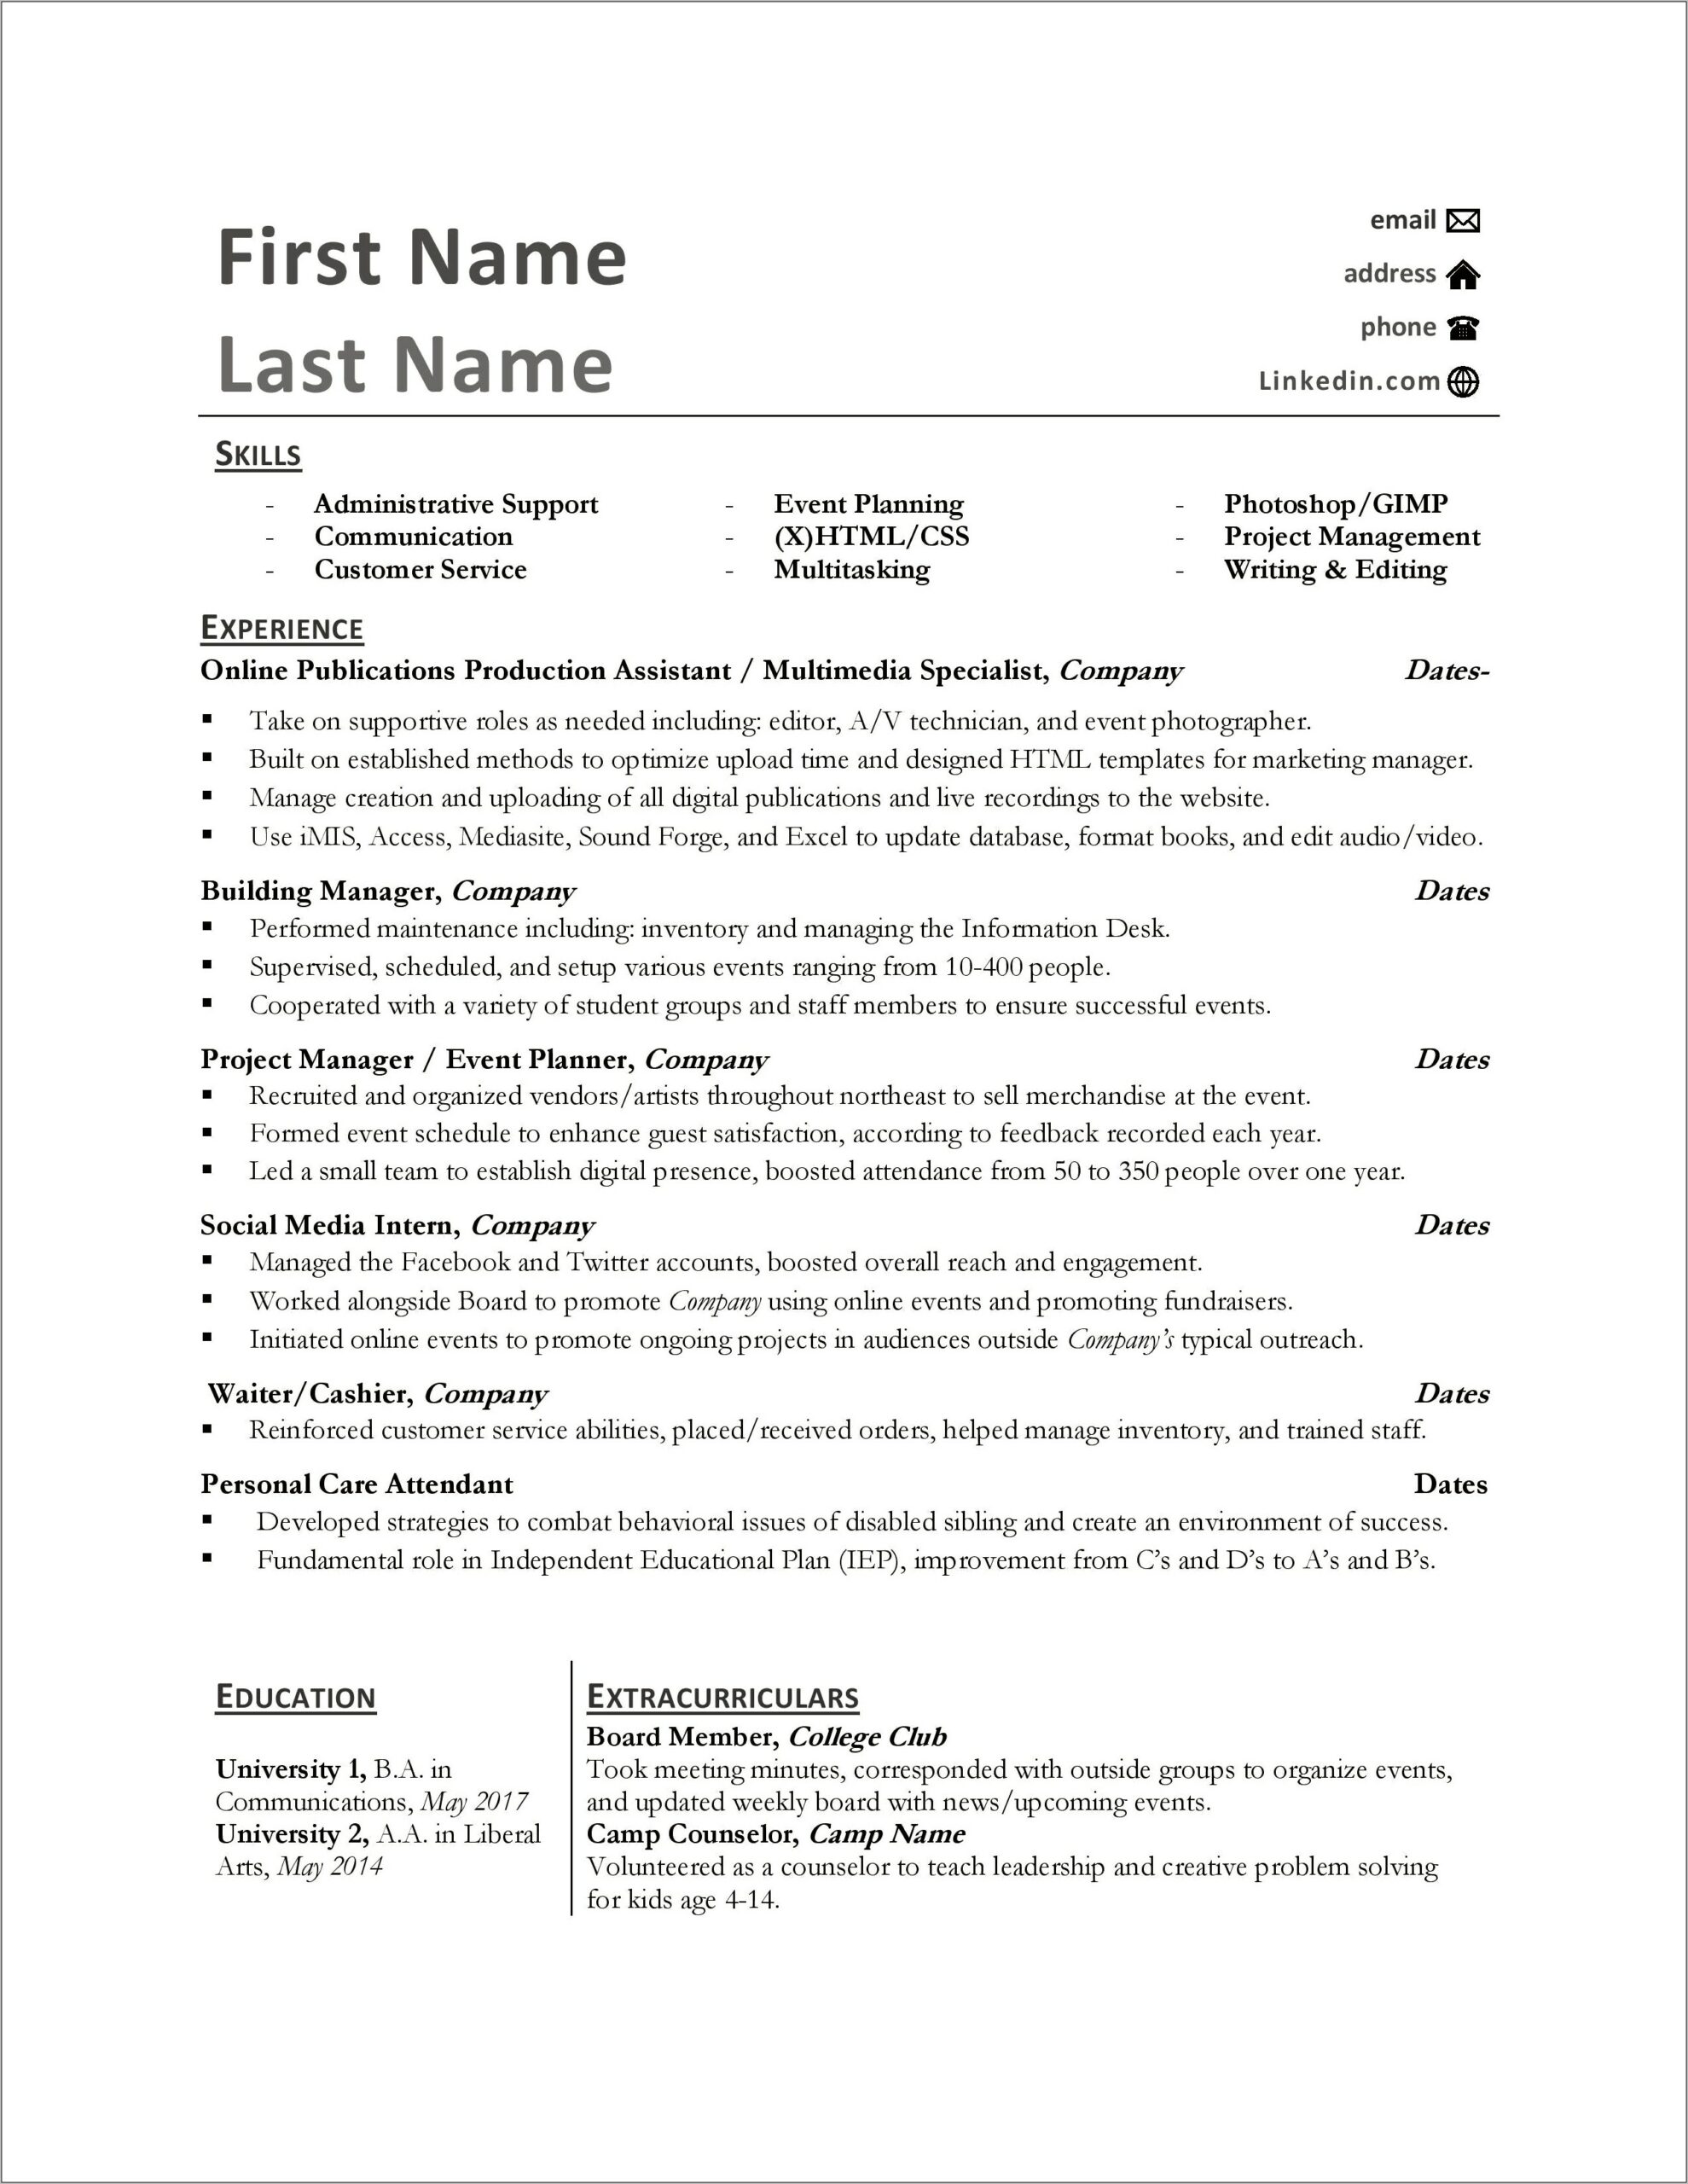 Job Title Change Same Responsibilities Resume